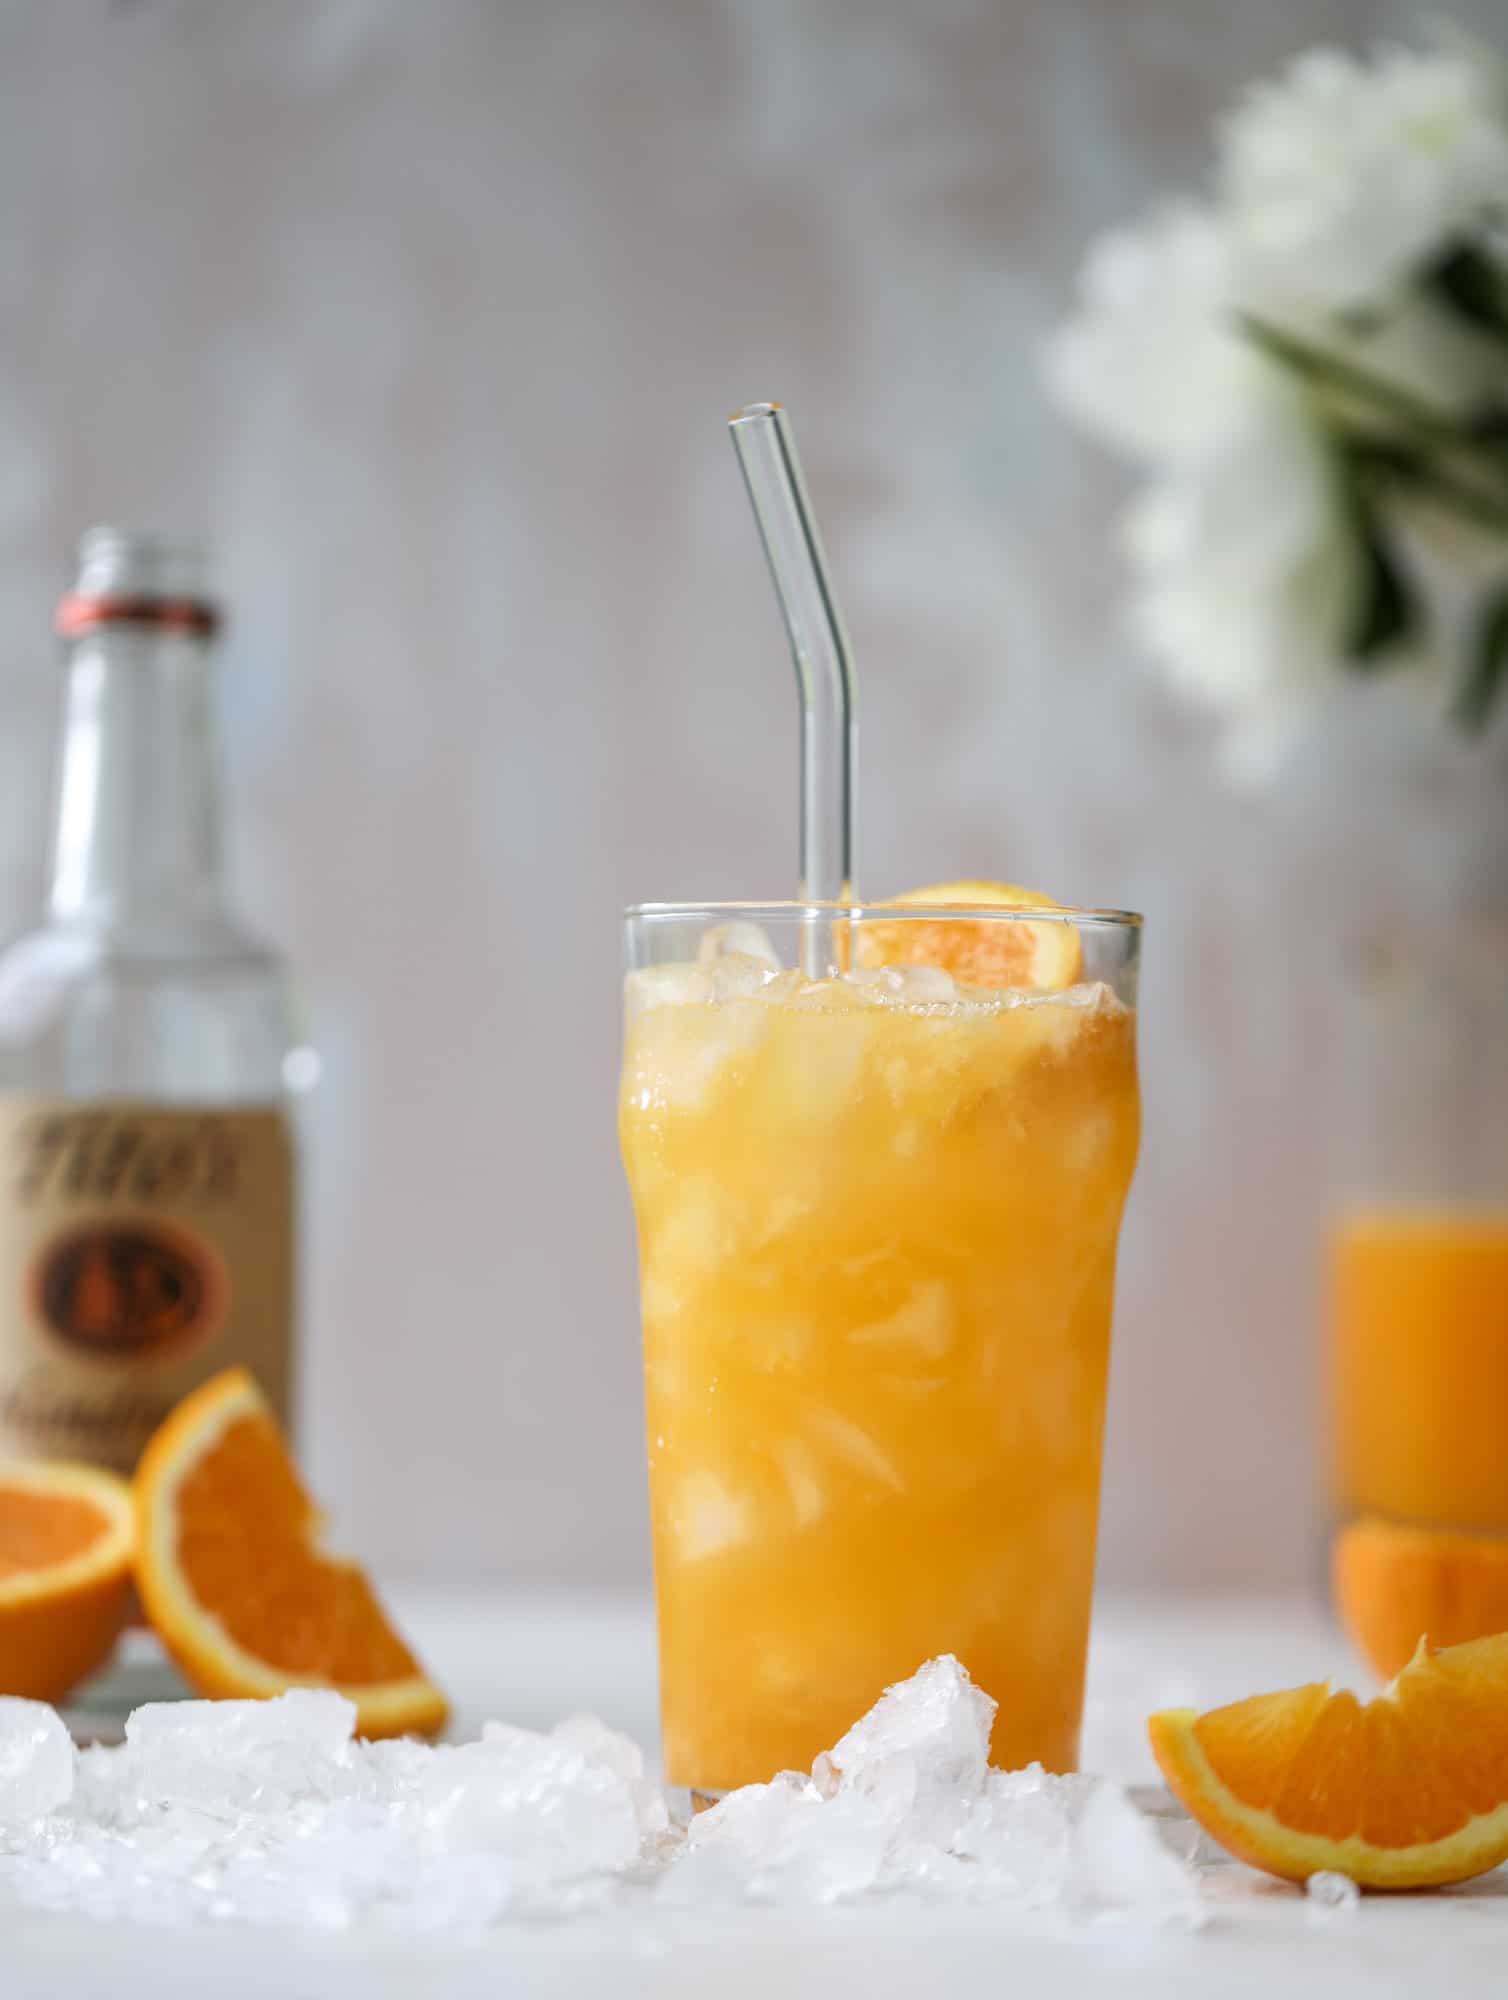 Orange Crush - The Orange Crush Cocktail from Ocean City